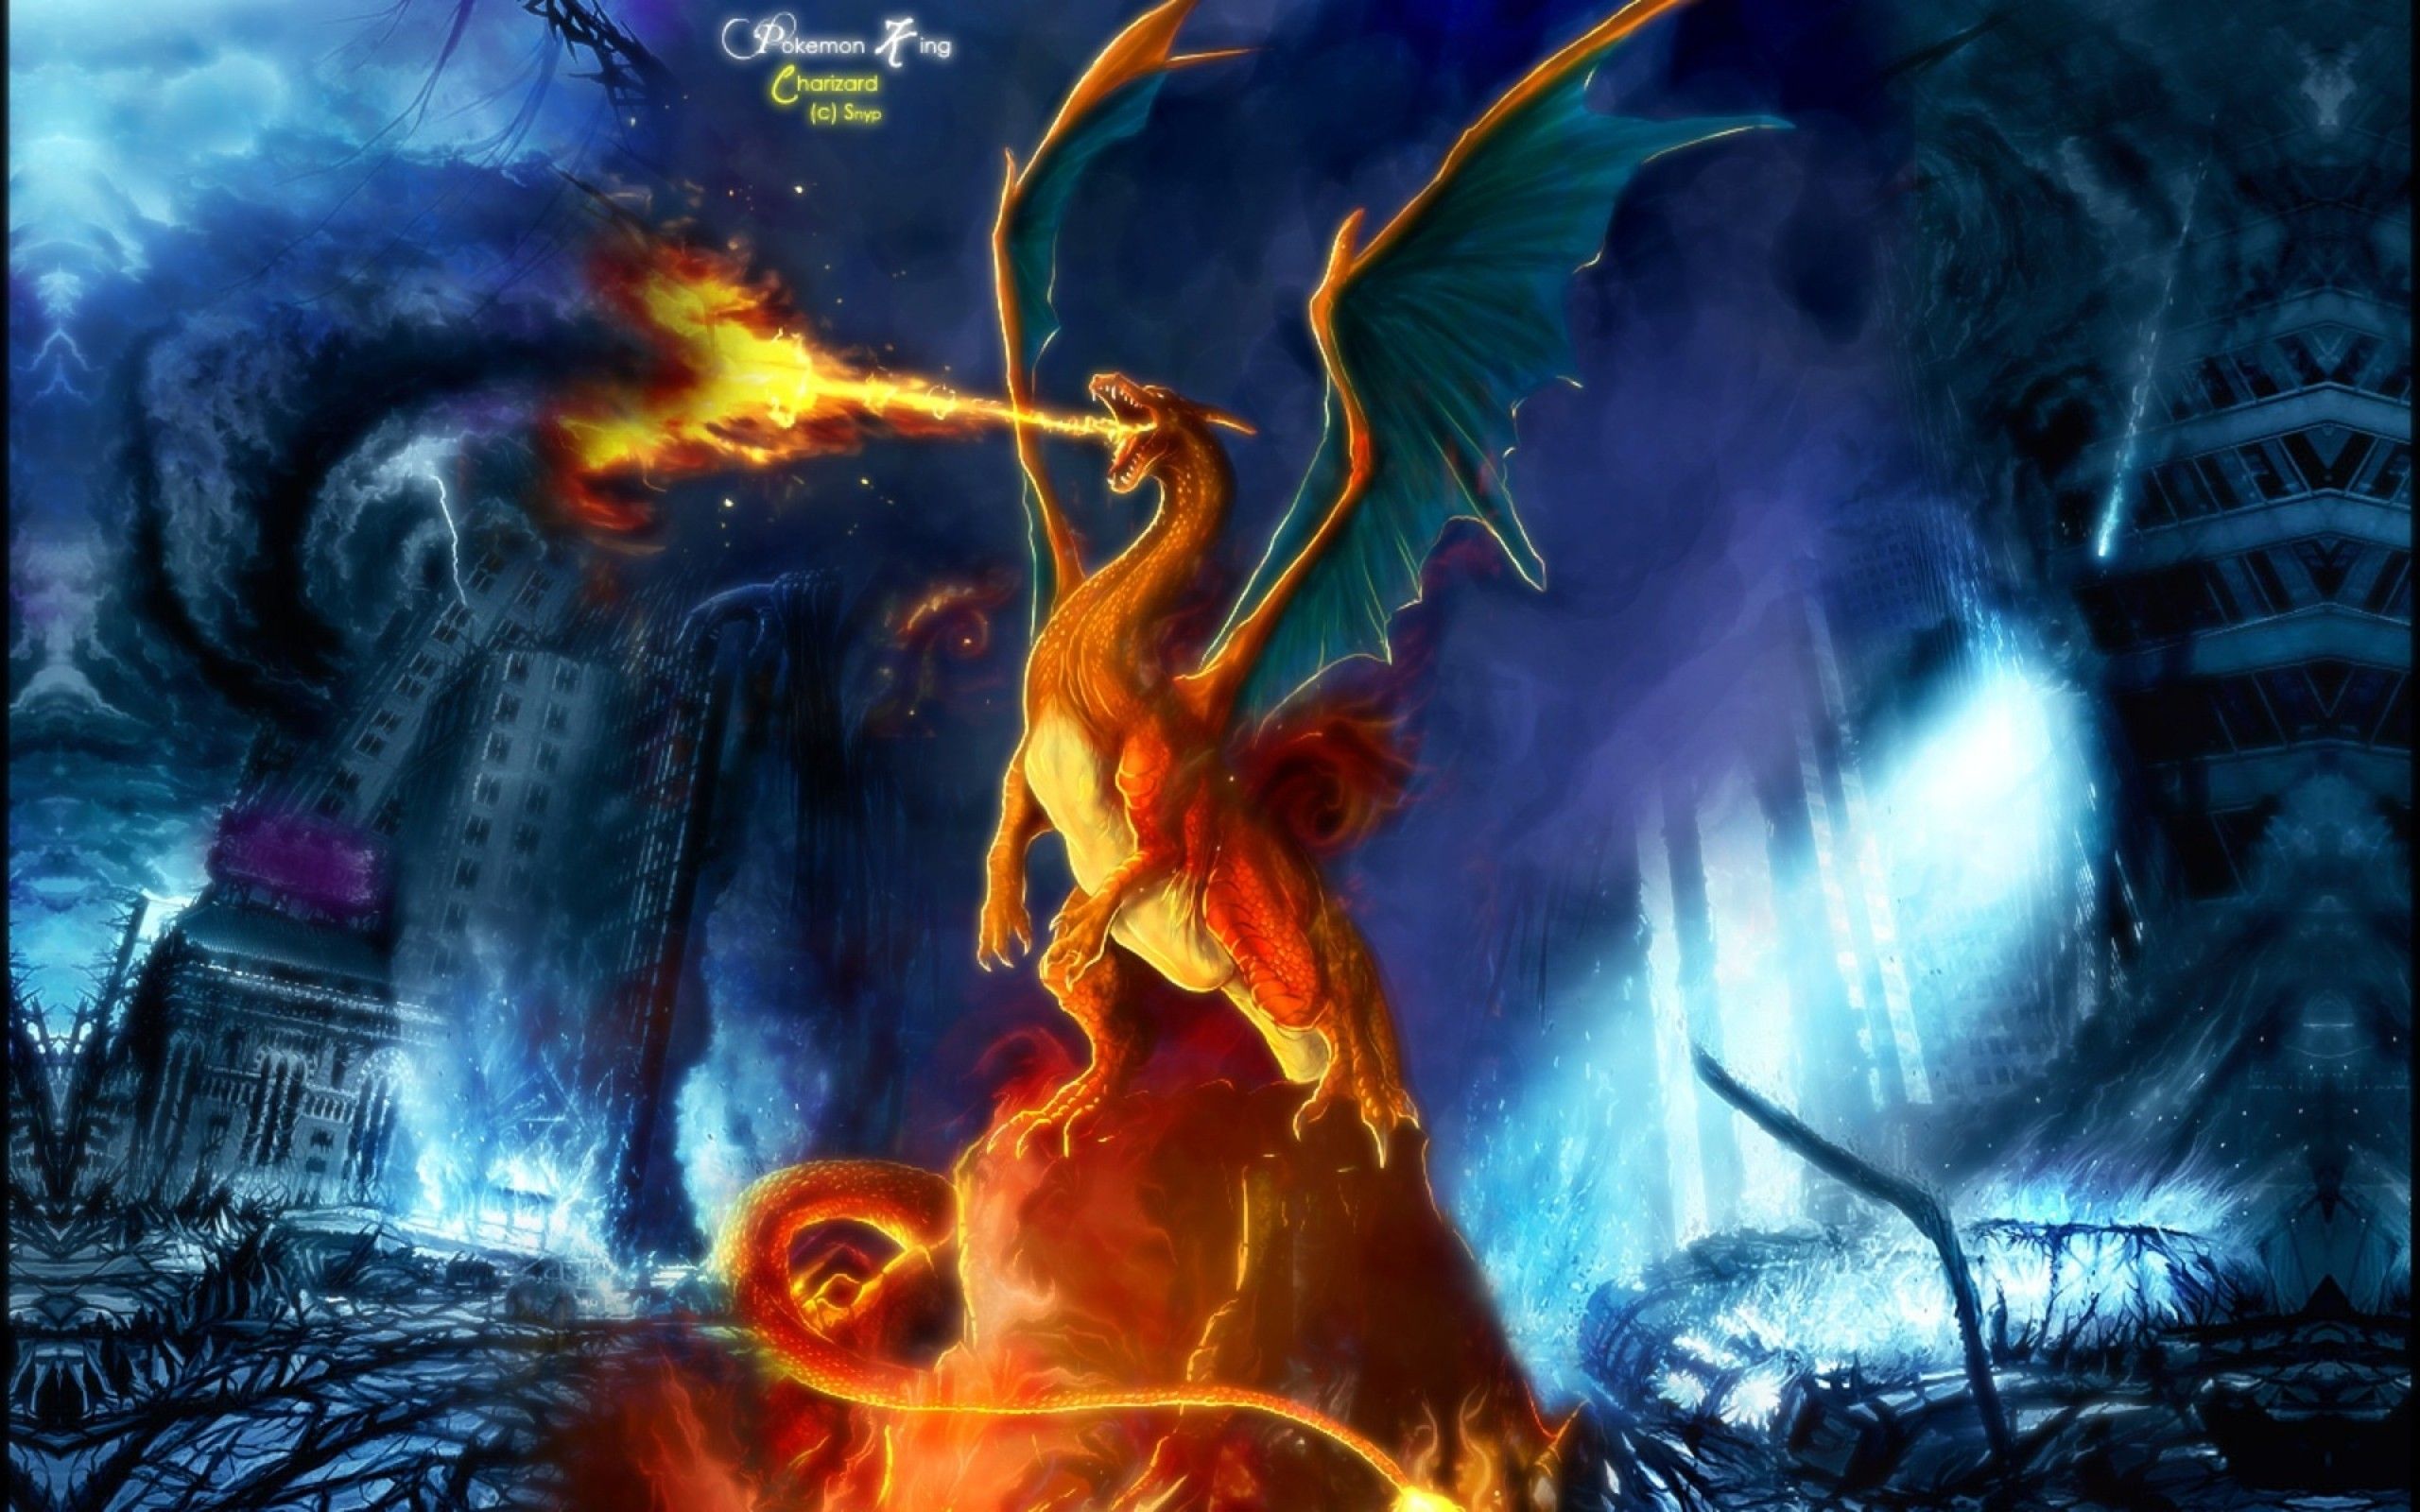 Download 2560x1600 Fire Breathing Dragon In The City, Pokemon Wallpaper